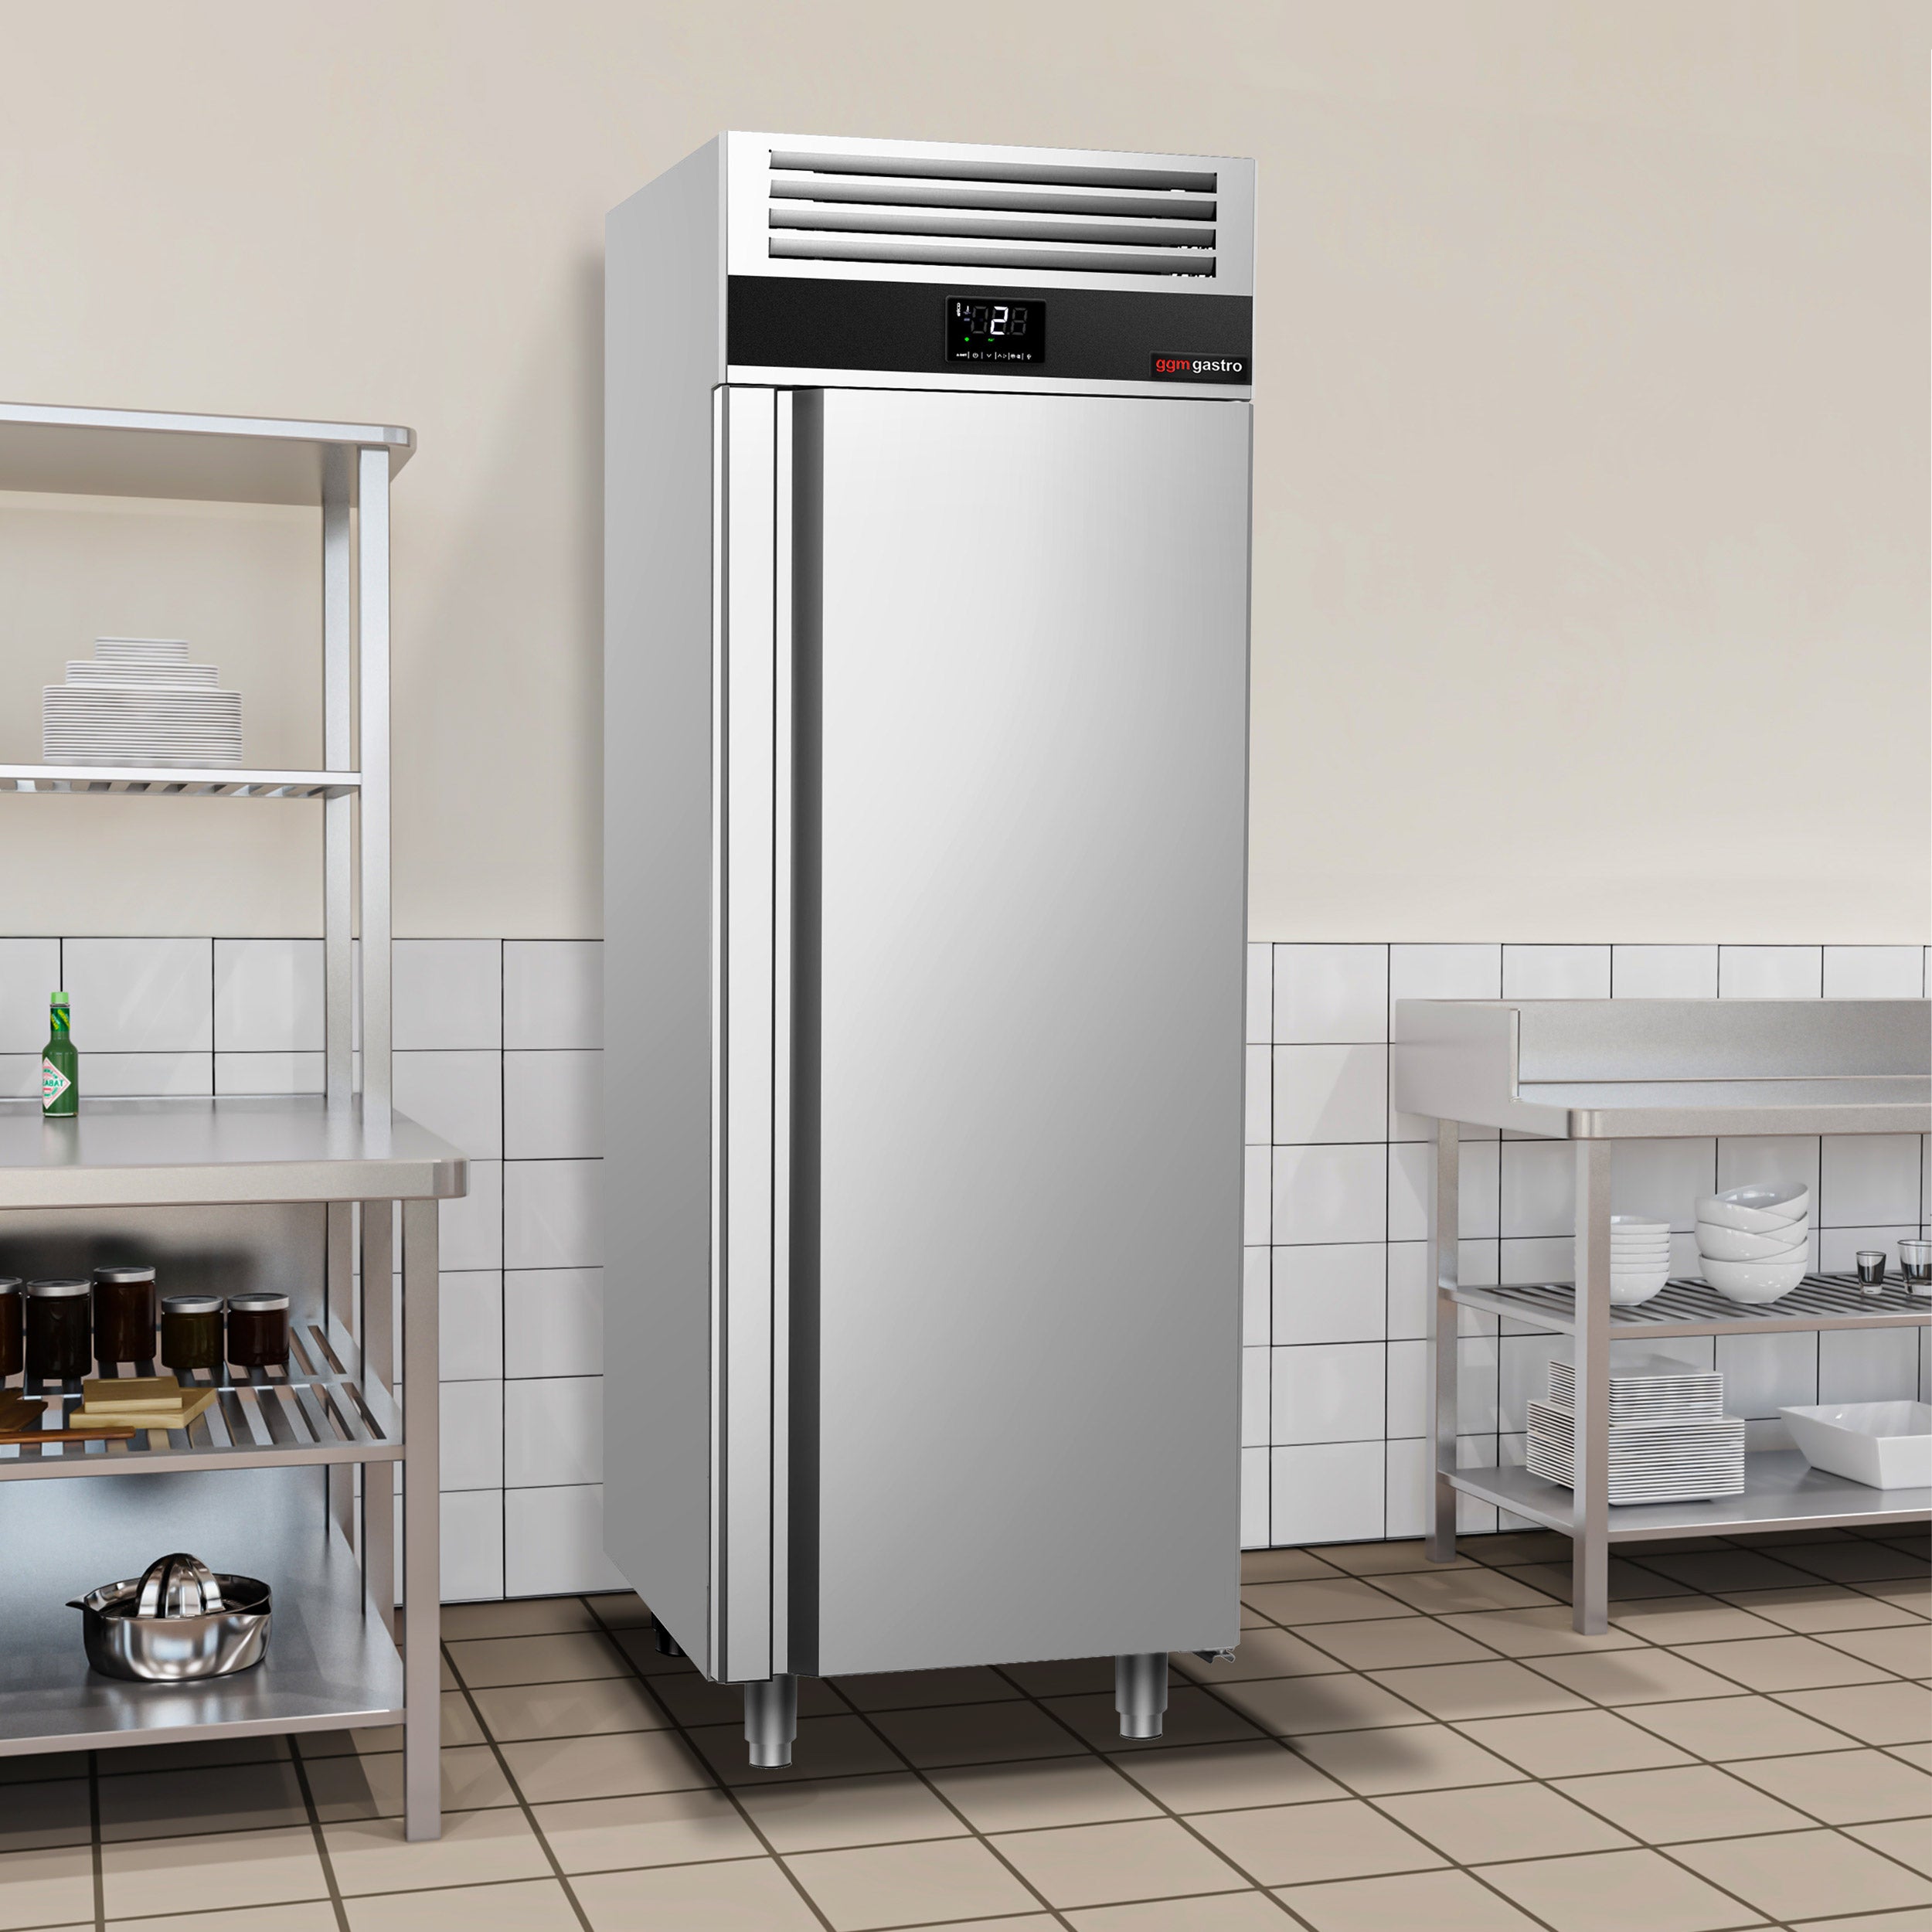 Køleskab - 0,7 x 0,81 m - 700 liter - med 1 låge i rustfrit stål